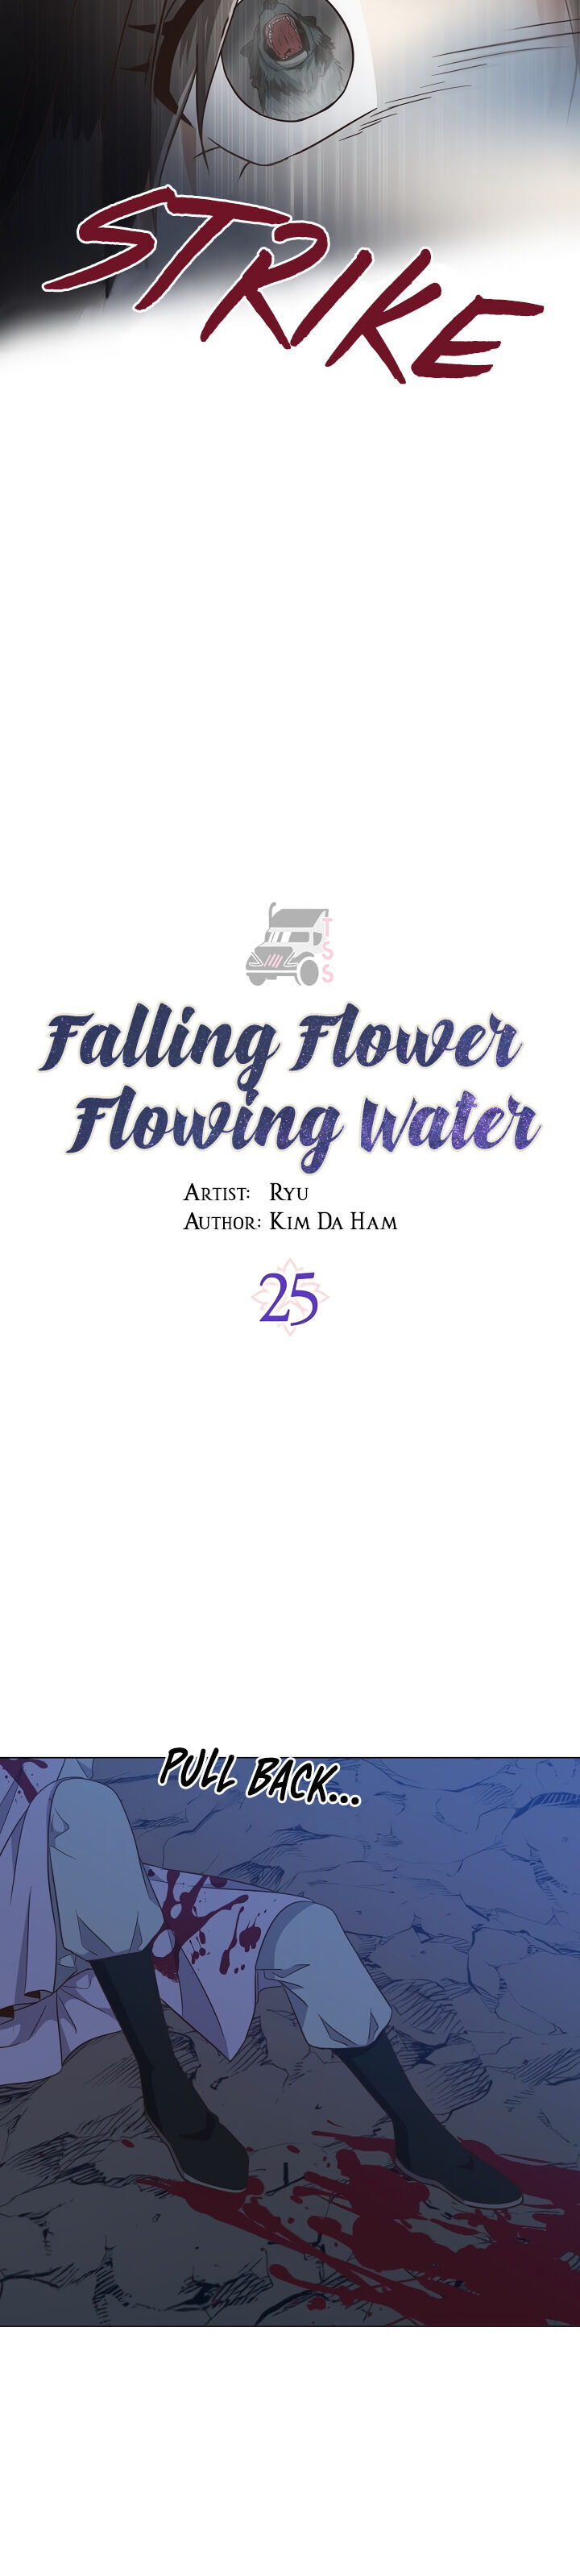 Falling Flower, Flowing Water - Page 2